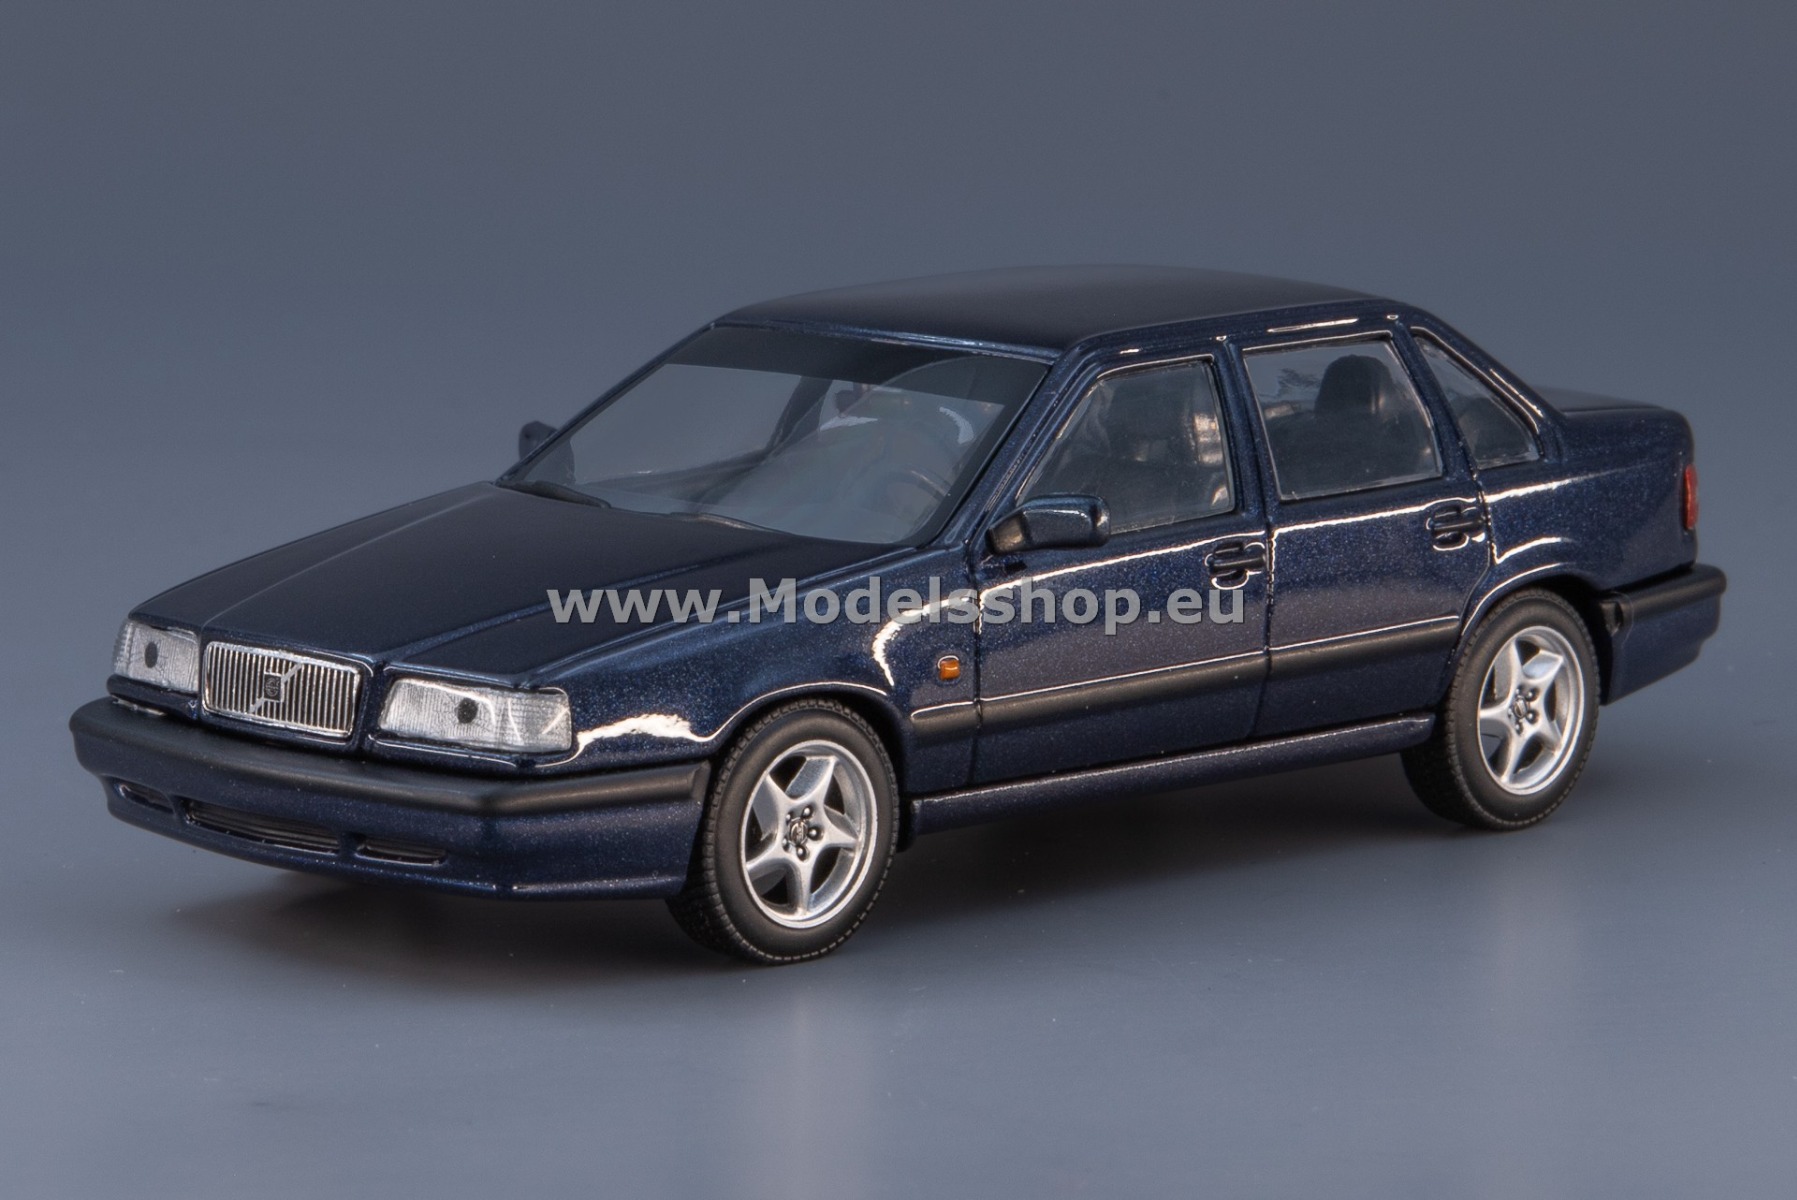 Maxichamps 940171461 Volvo 850, 1994 /dark blue metallic/